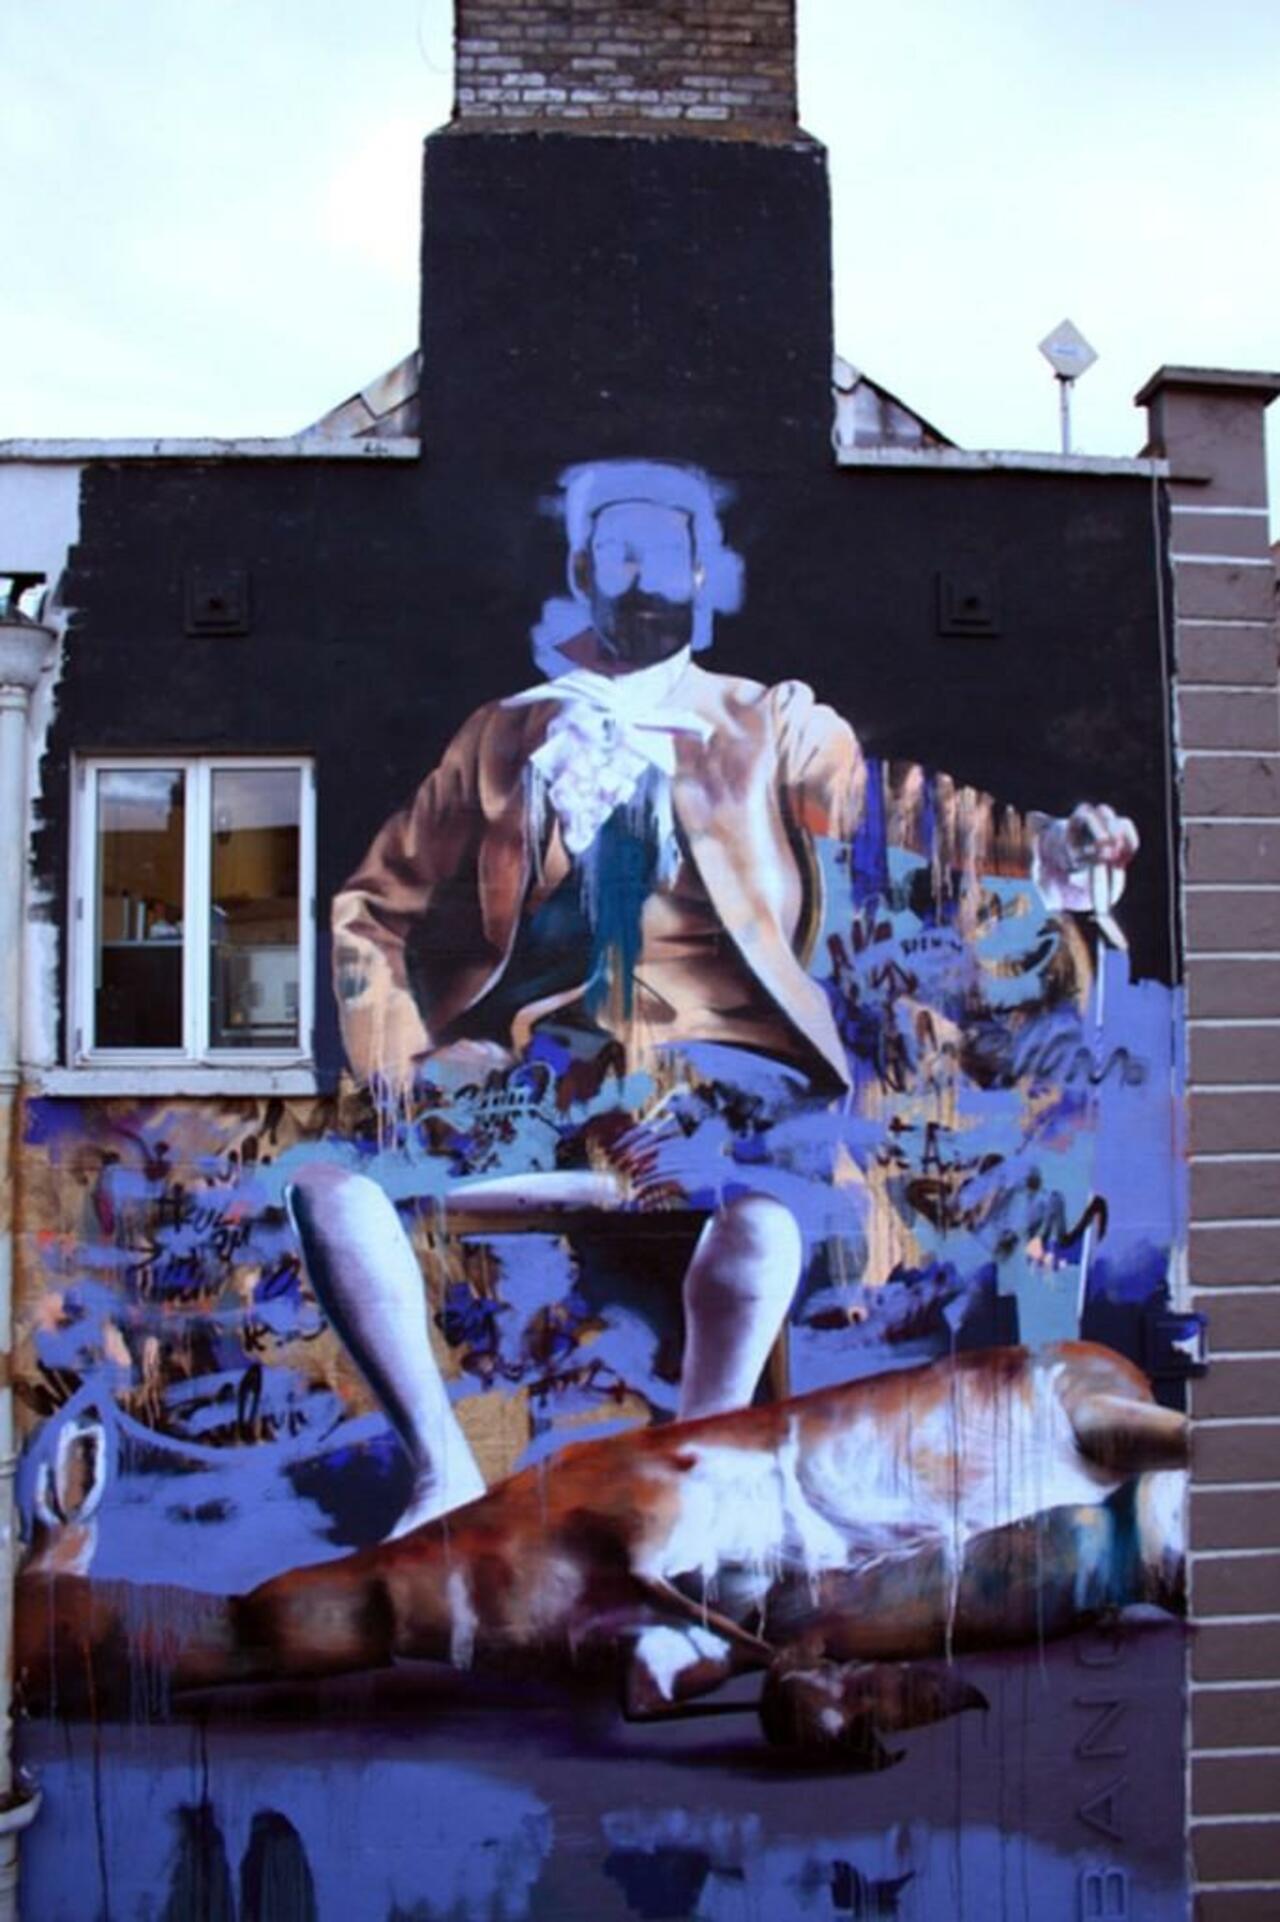 RT @DollsOffCloud9: Street Art by Conor Harrington

#streetart #art #graffiti #mural #urbanart http://t.co/4bkXiOaBLC